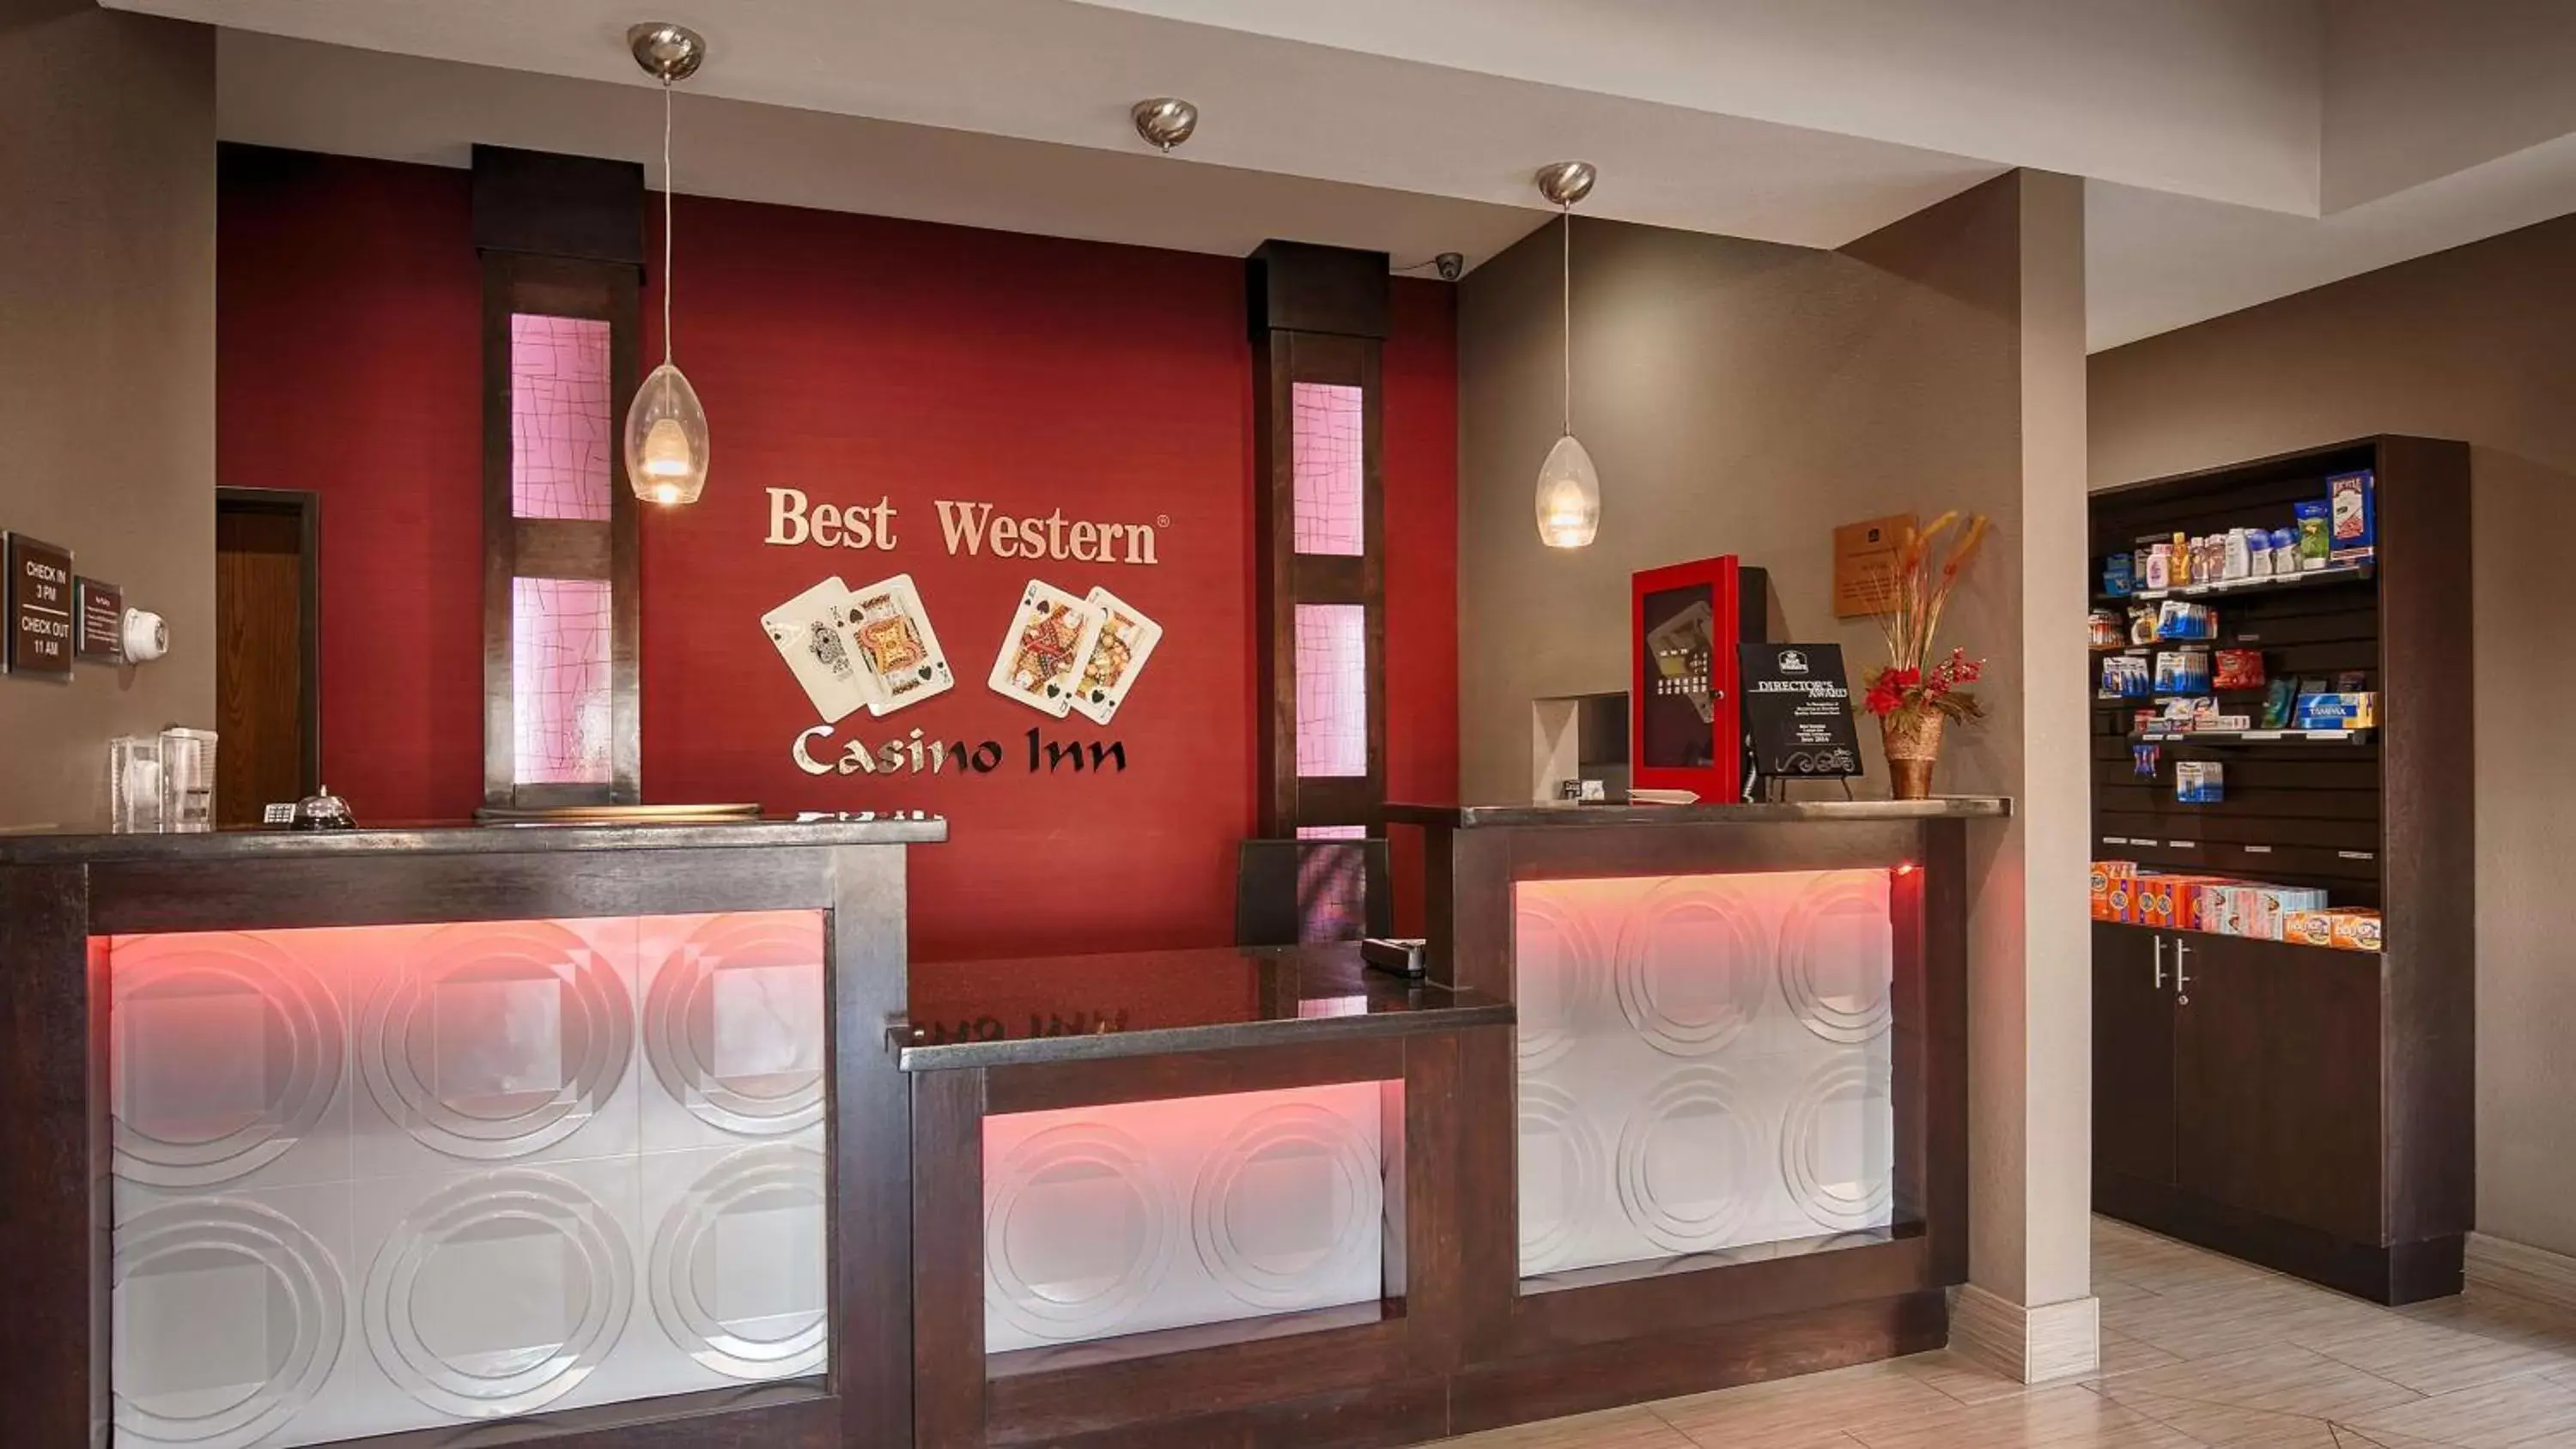 Lobby or reception in Best Western Casino Inn